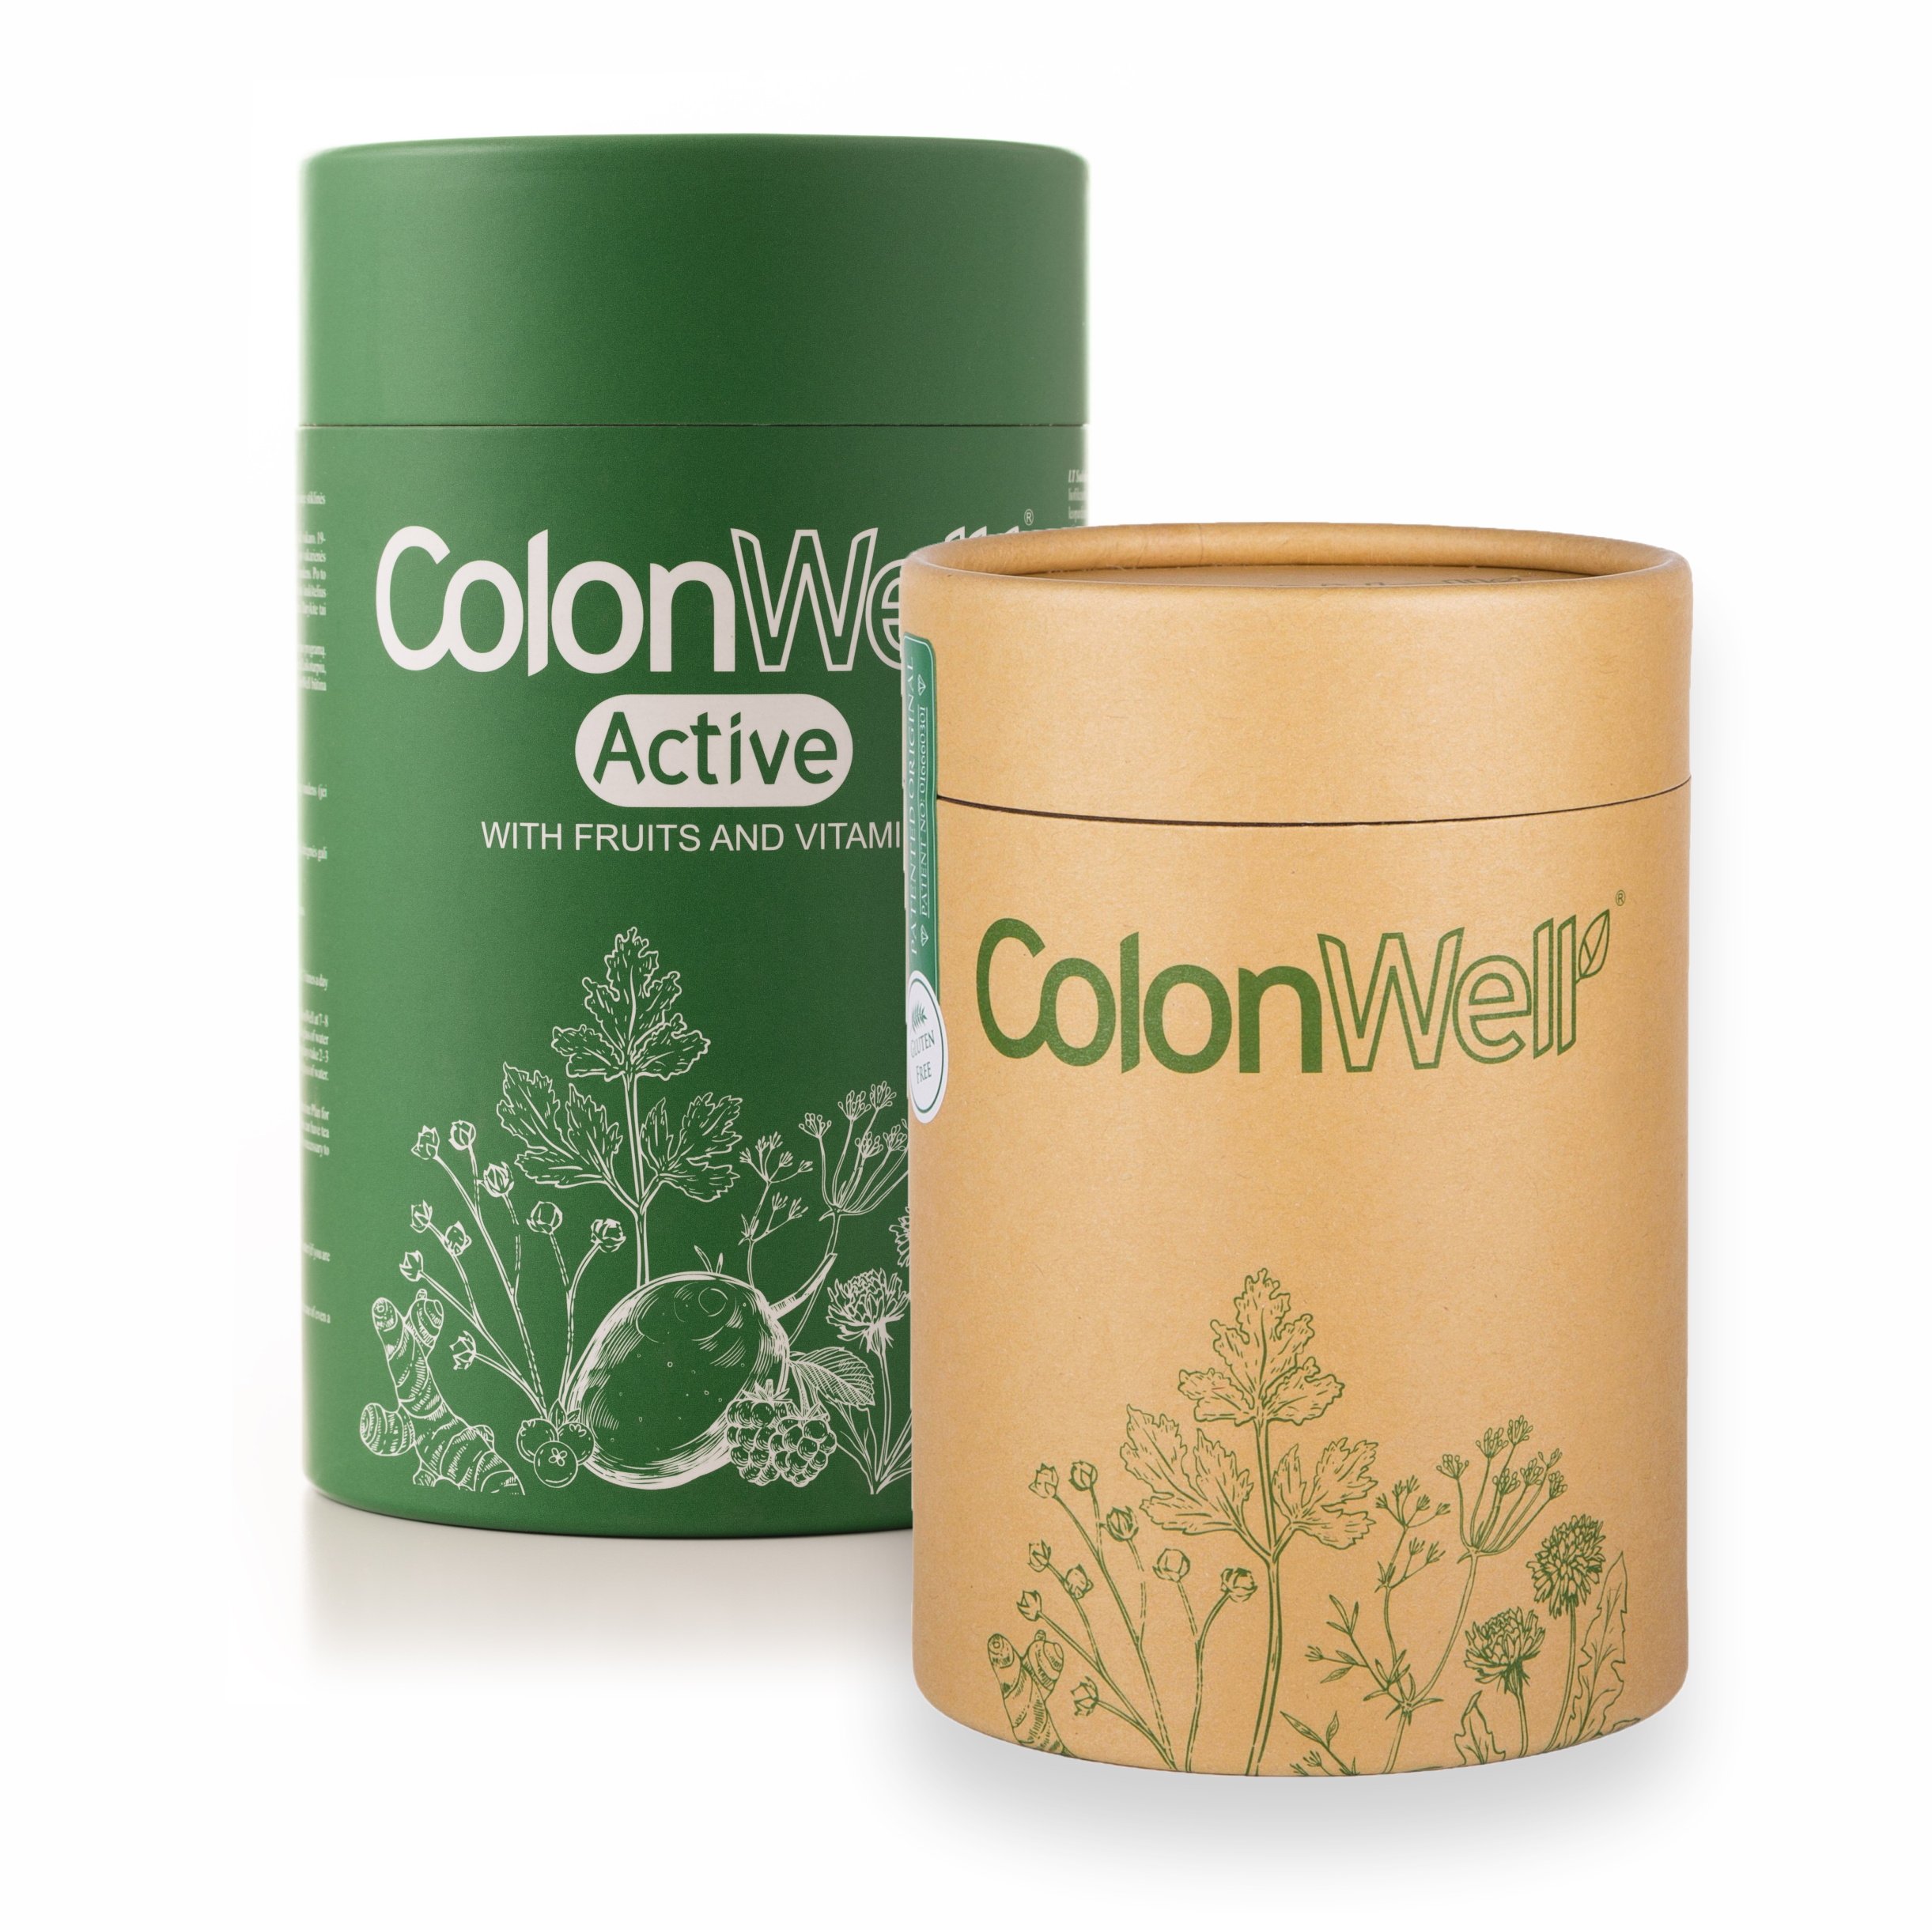 Colonwell.lt produktas - ColoWell (natūralaus skonio)400g. + Colonwell Active (su vaisiais ir vitaminais)350g.